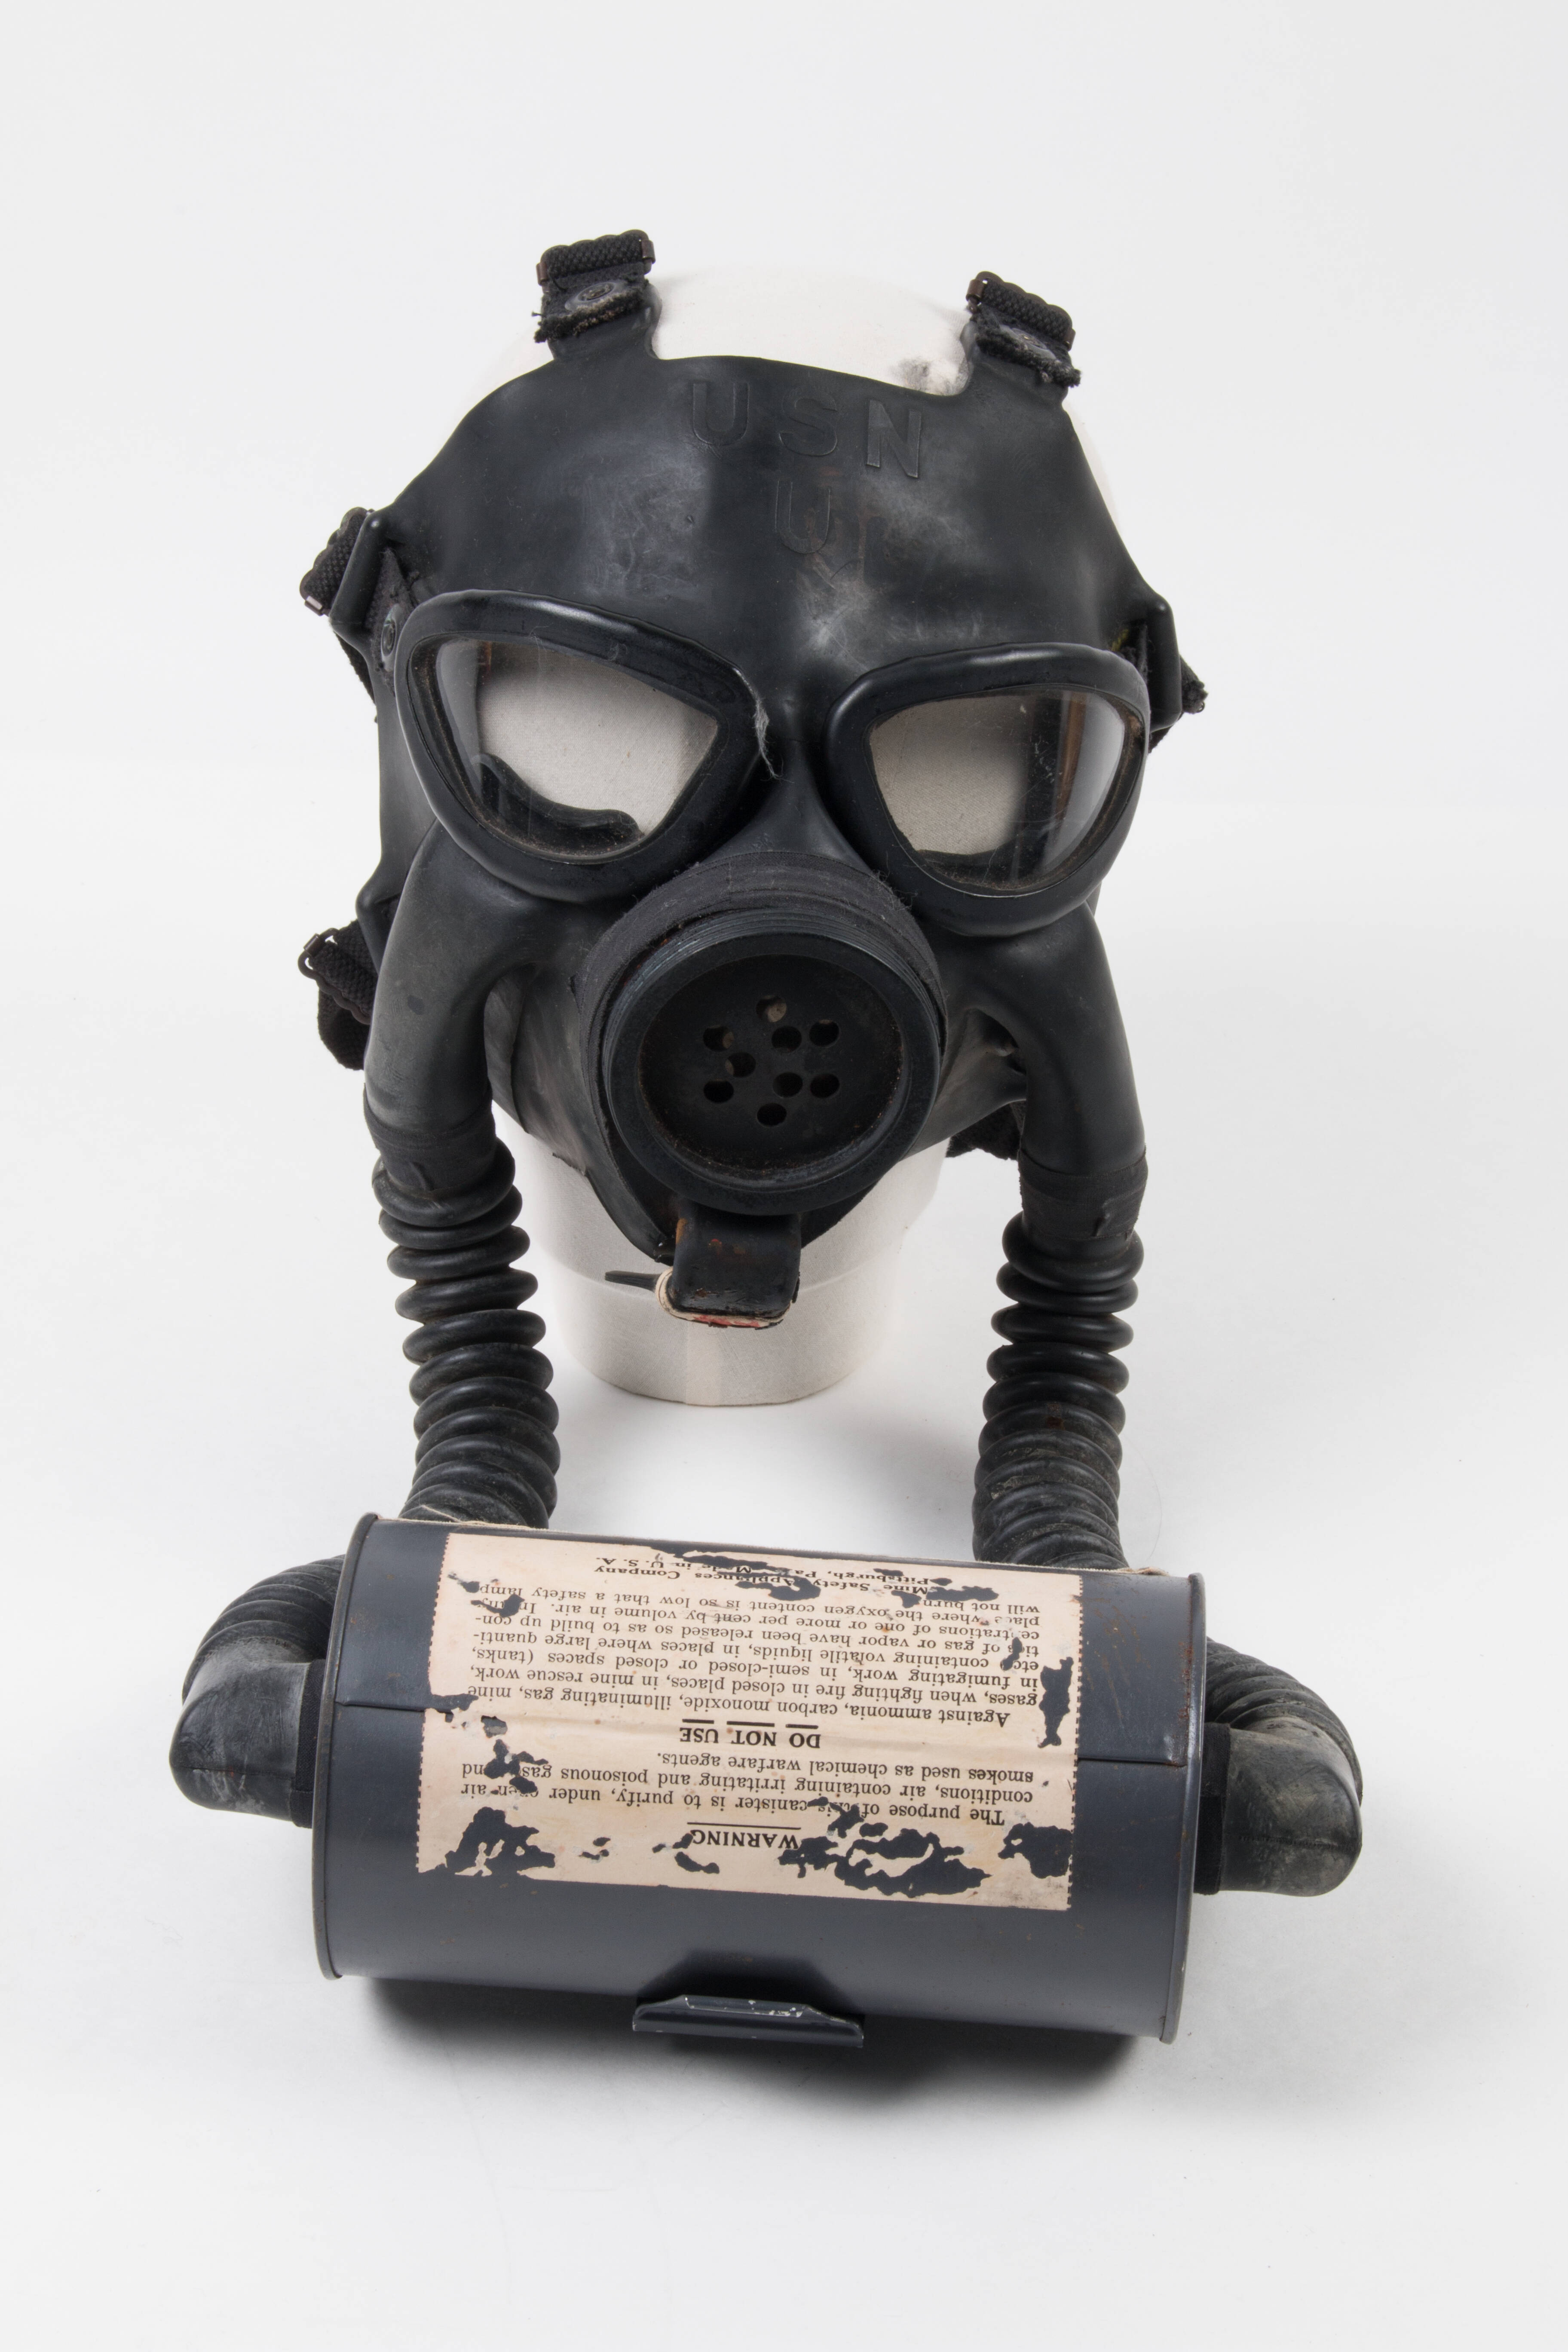 gas mask render